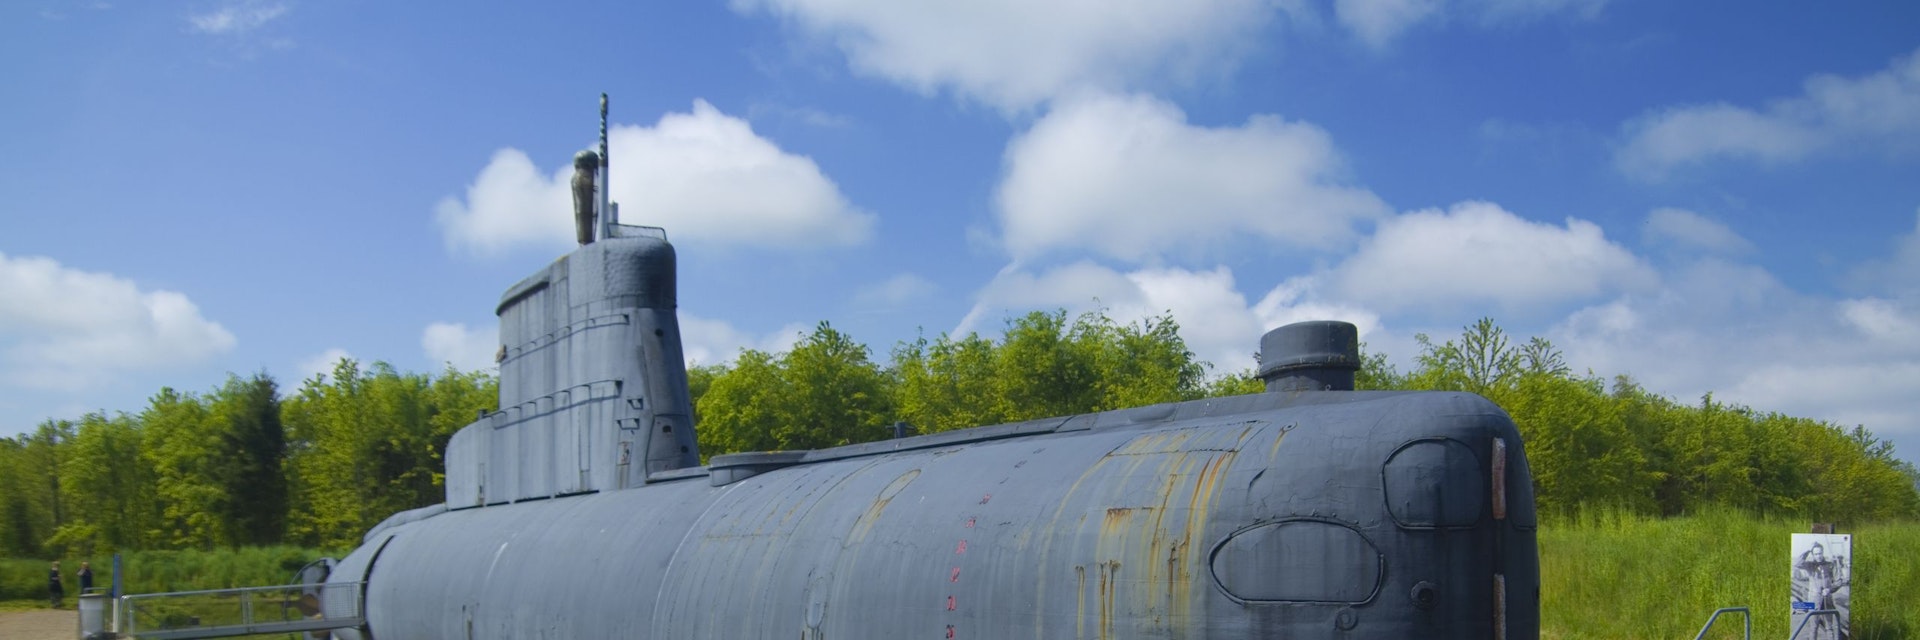 Submarine SPRINGEREN (Delfinen class) in The Cold War Museum “Langelandsfort."